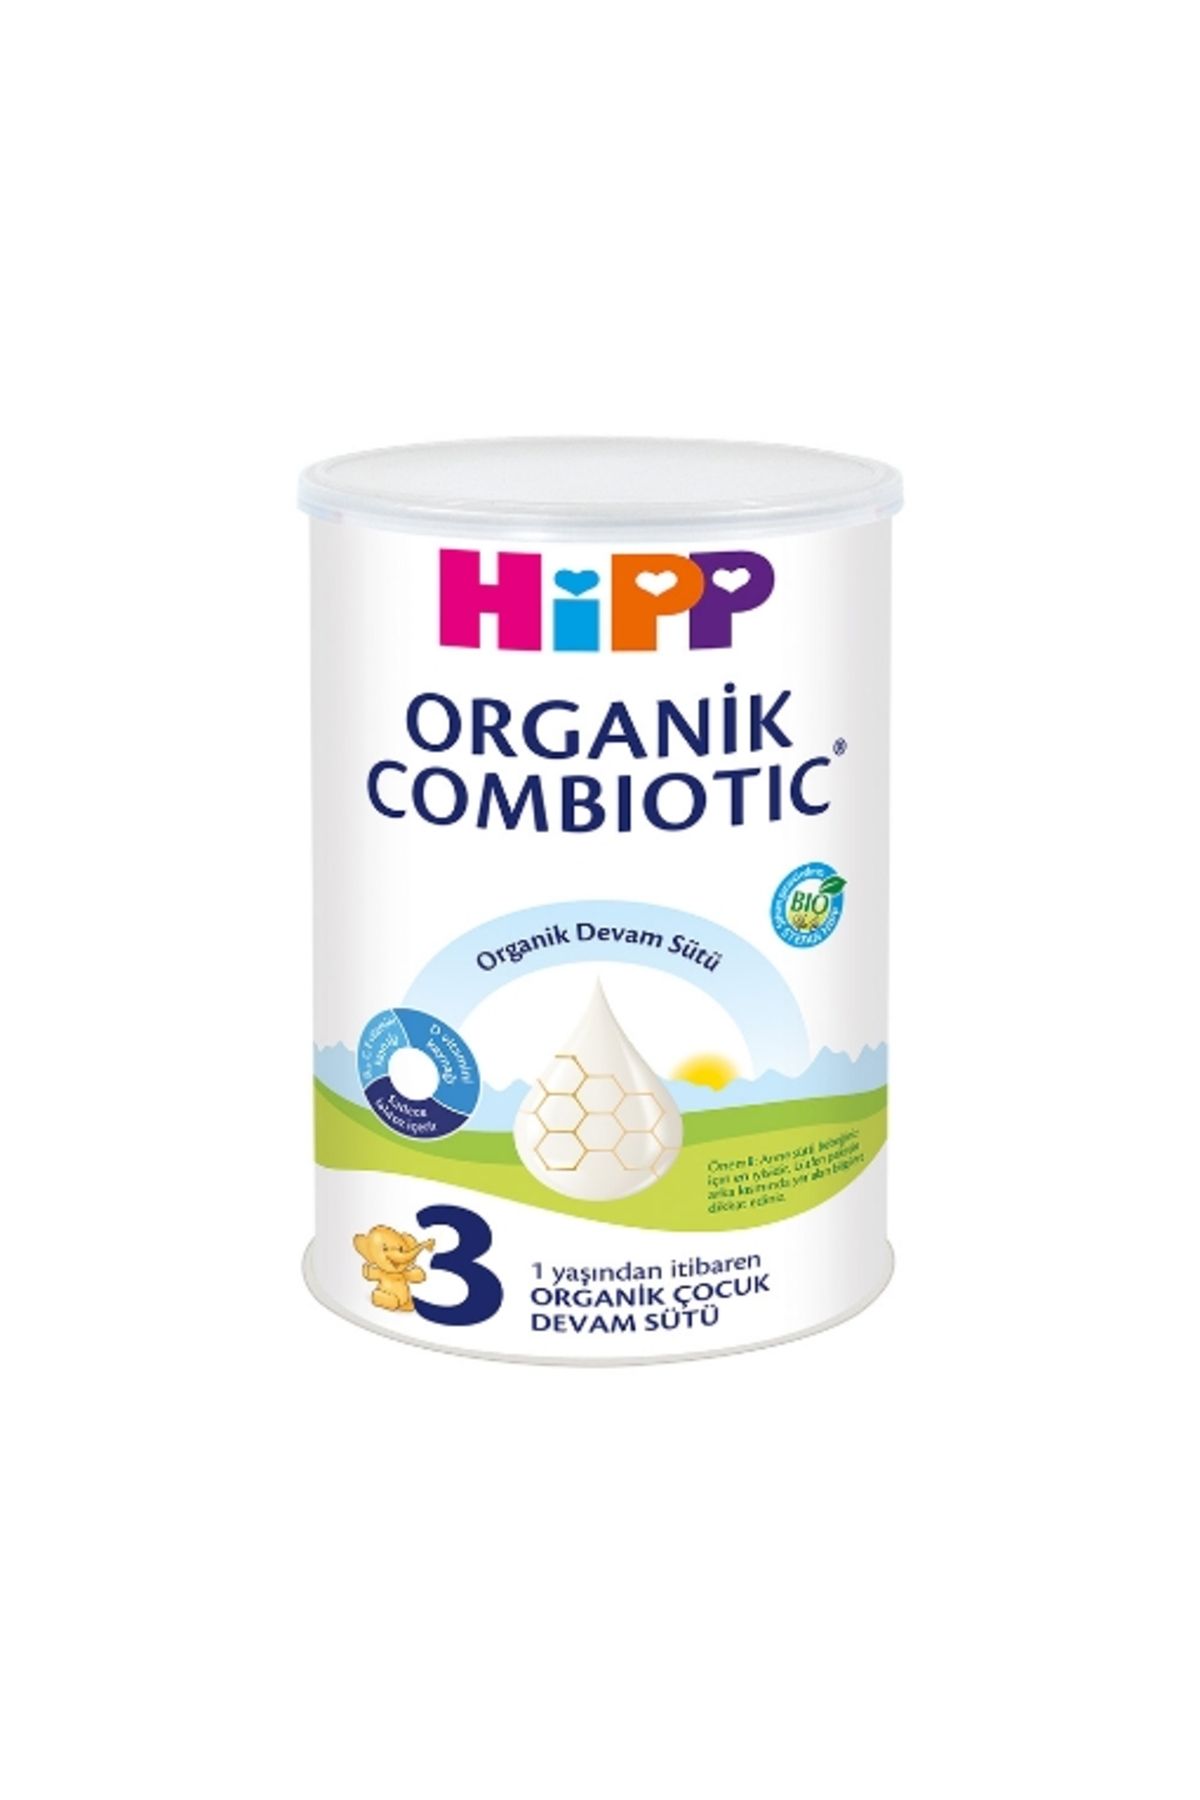 Hipp 3 Organik Combiotic Bebek Sütü 350 Gr.